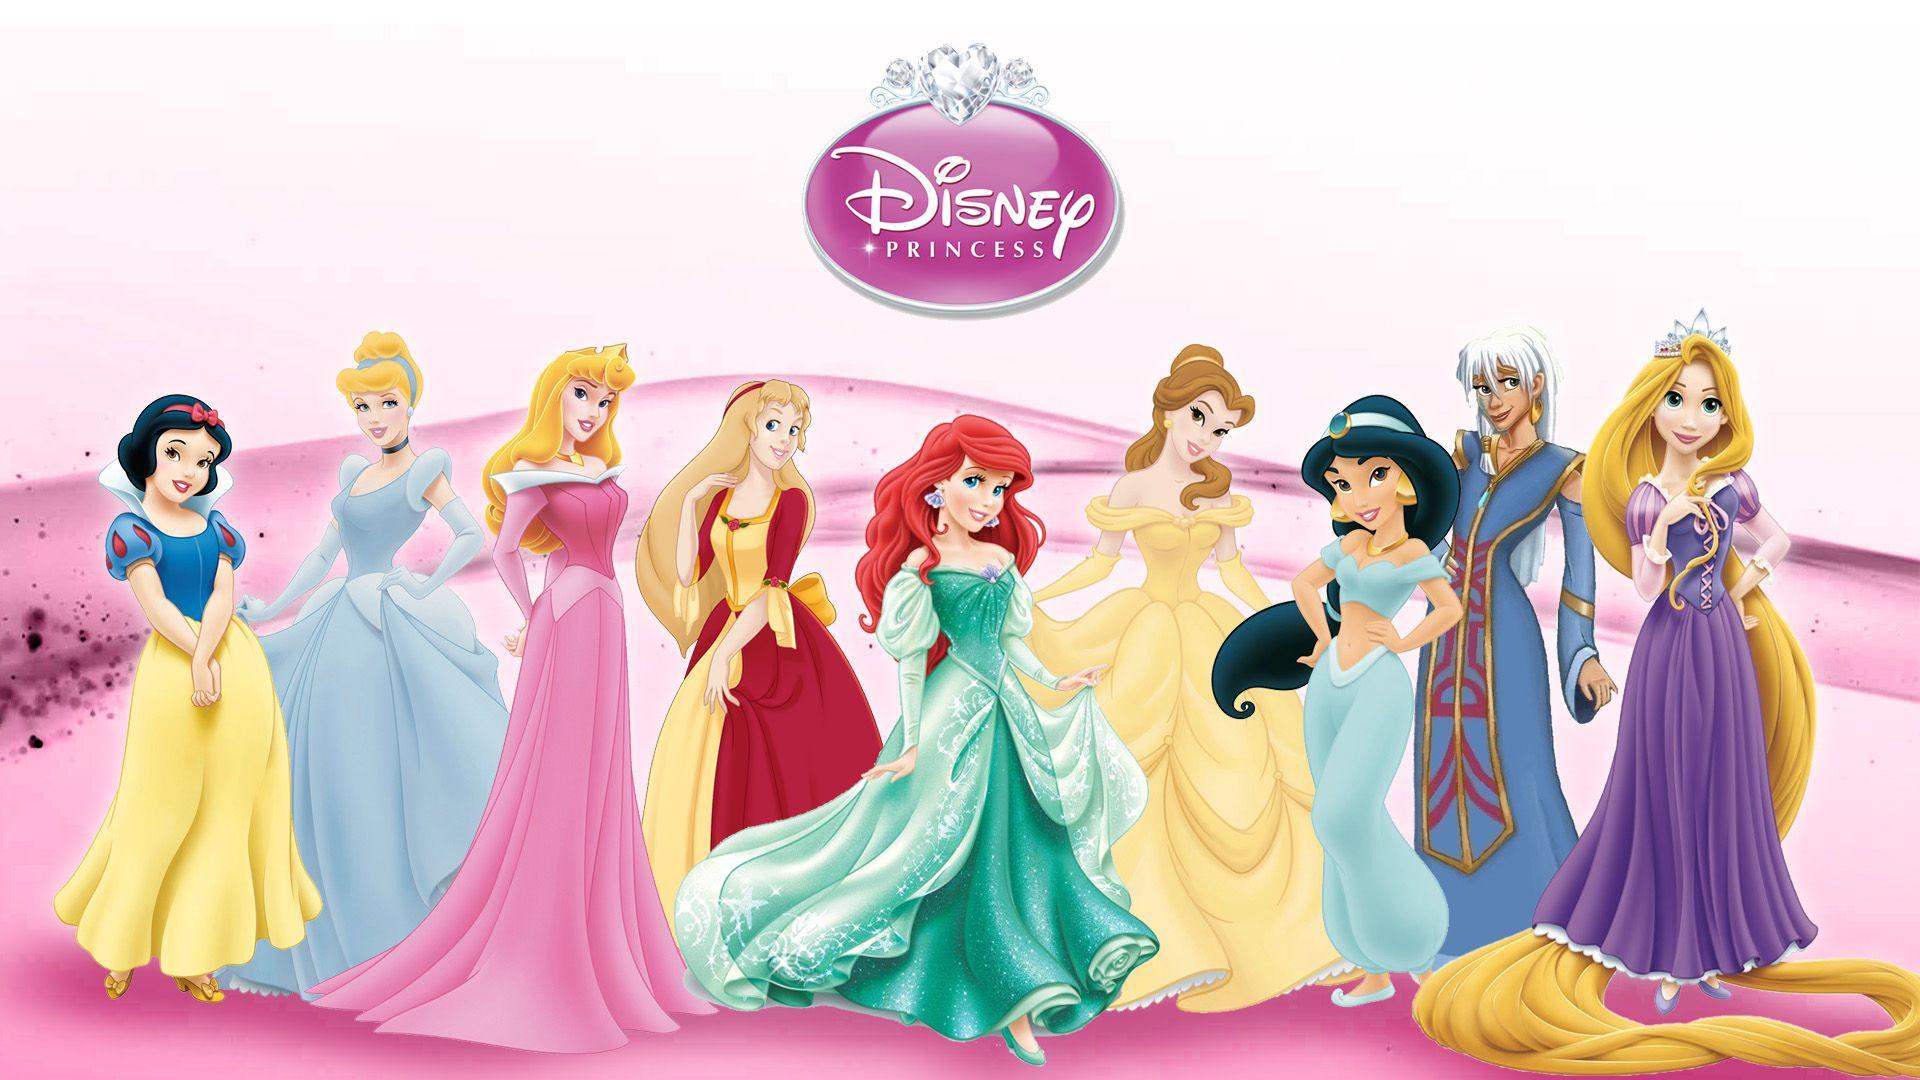 Princess Background Free Download